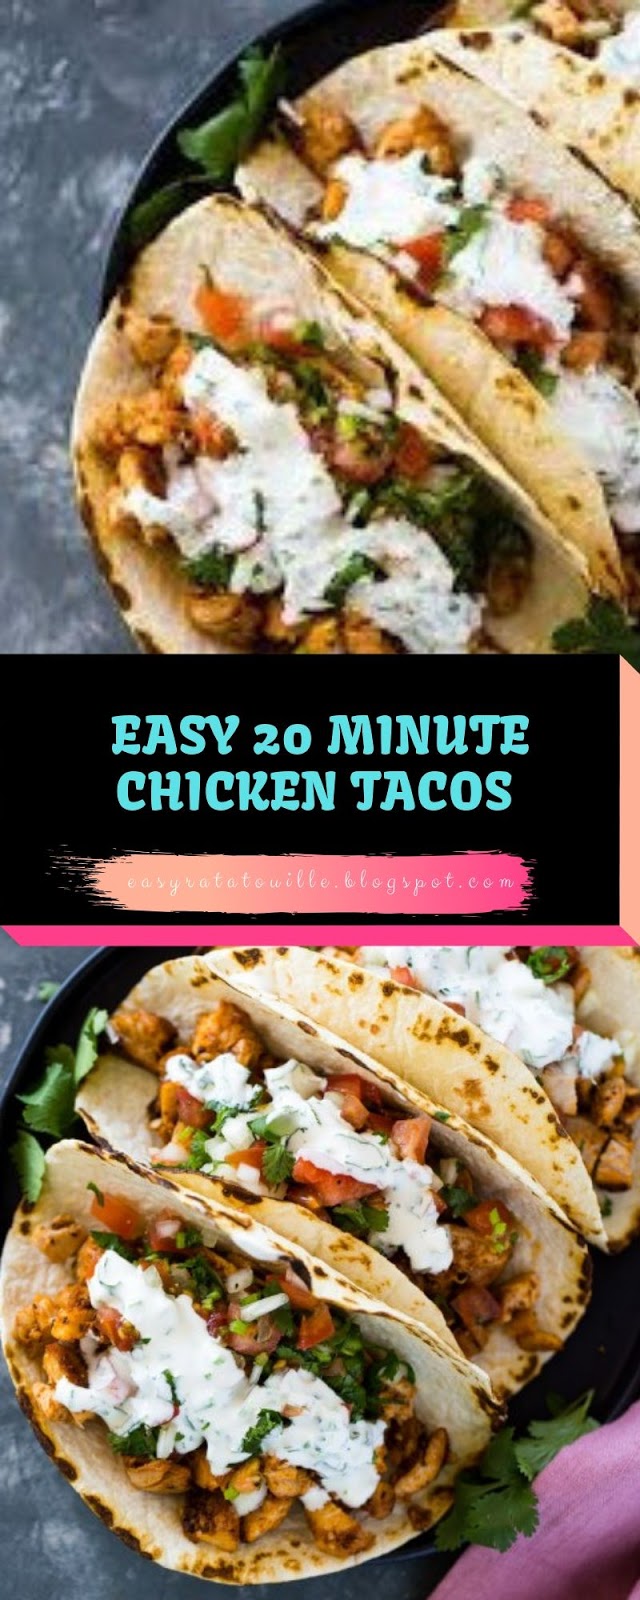 Easy 20 Minute Chicken Tacos